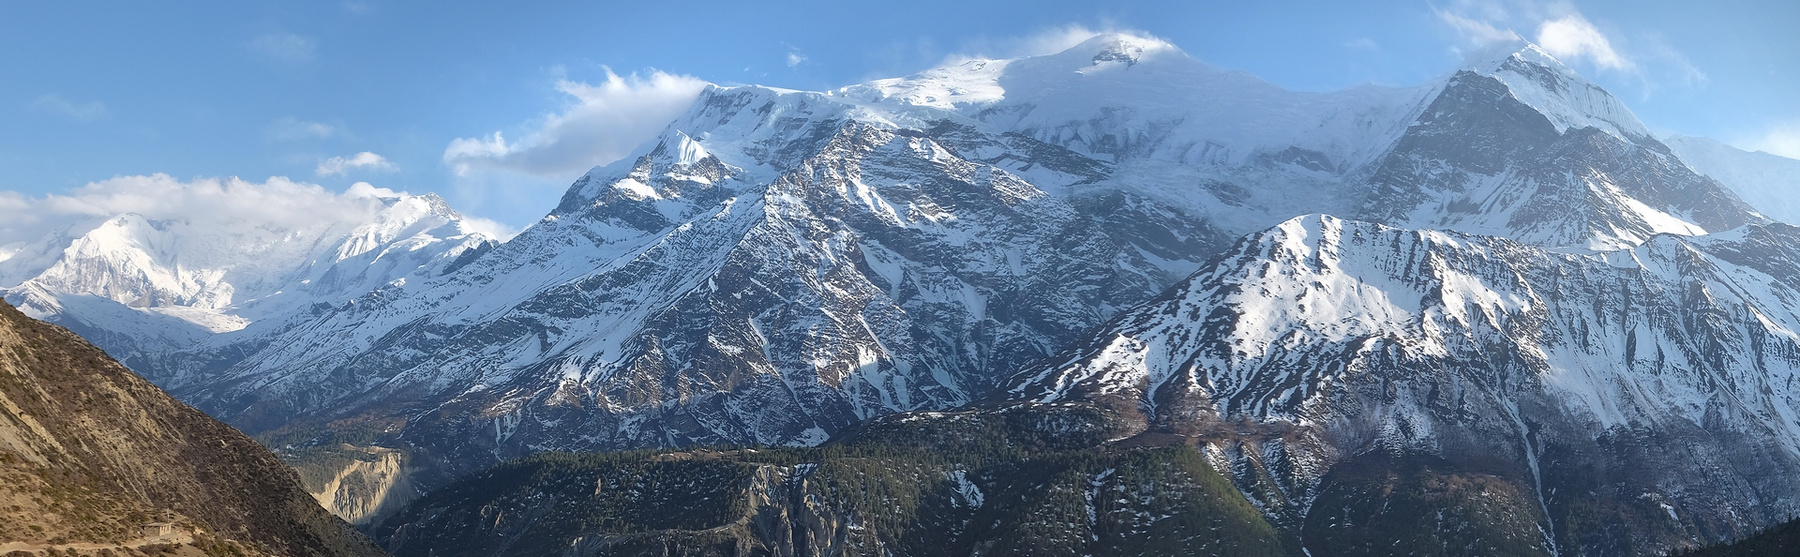 Лестница в небо Непал Гималаи горы трек Аннапурна